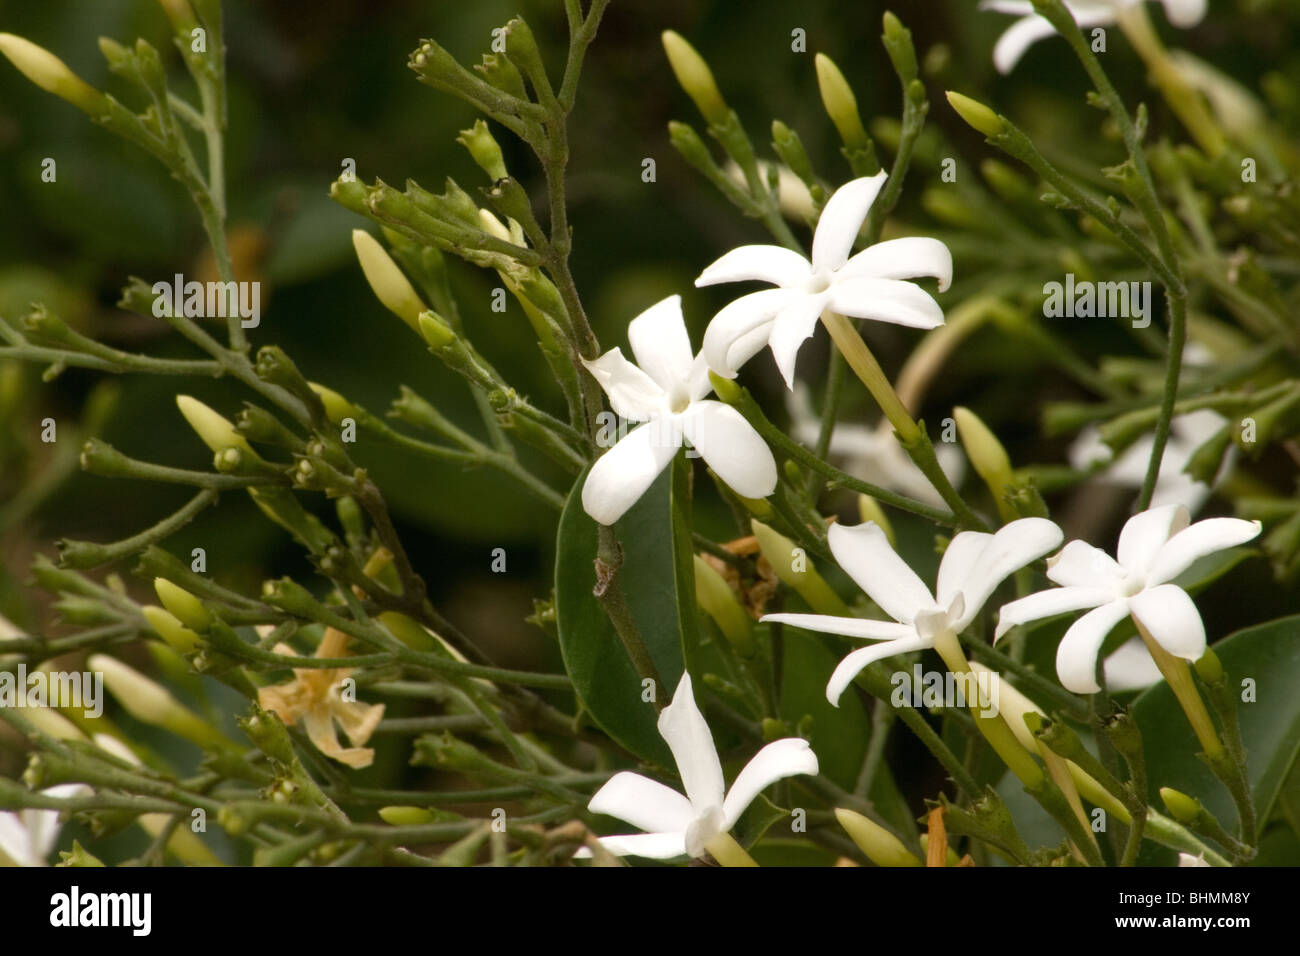 Jasmine plant in bloom Stock Photo